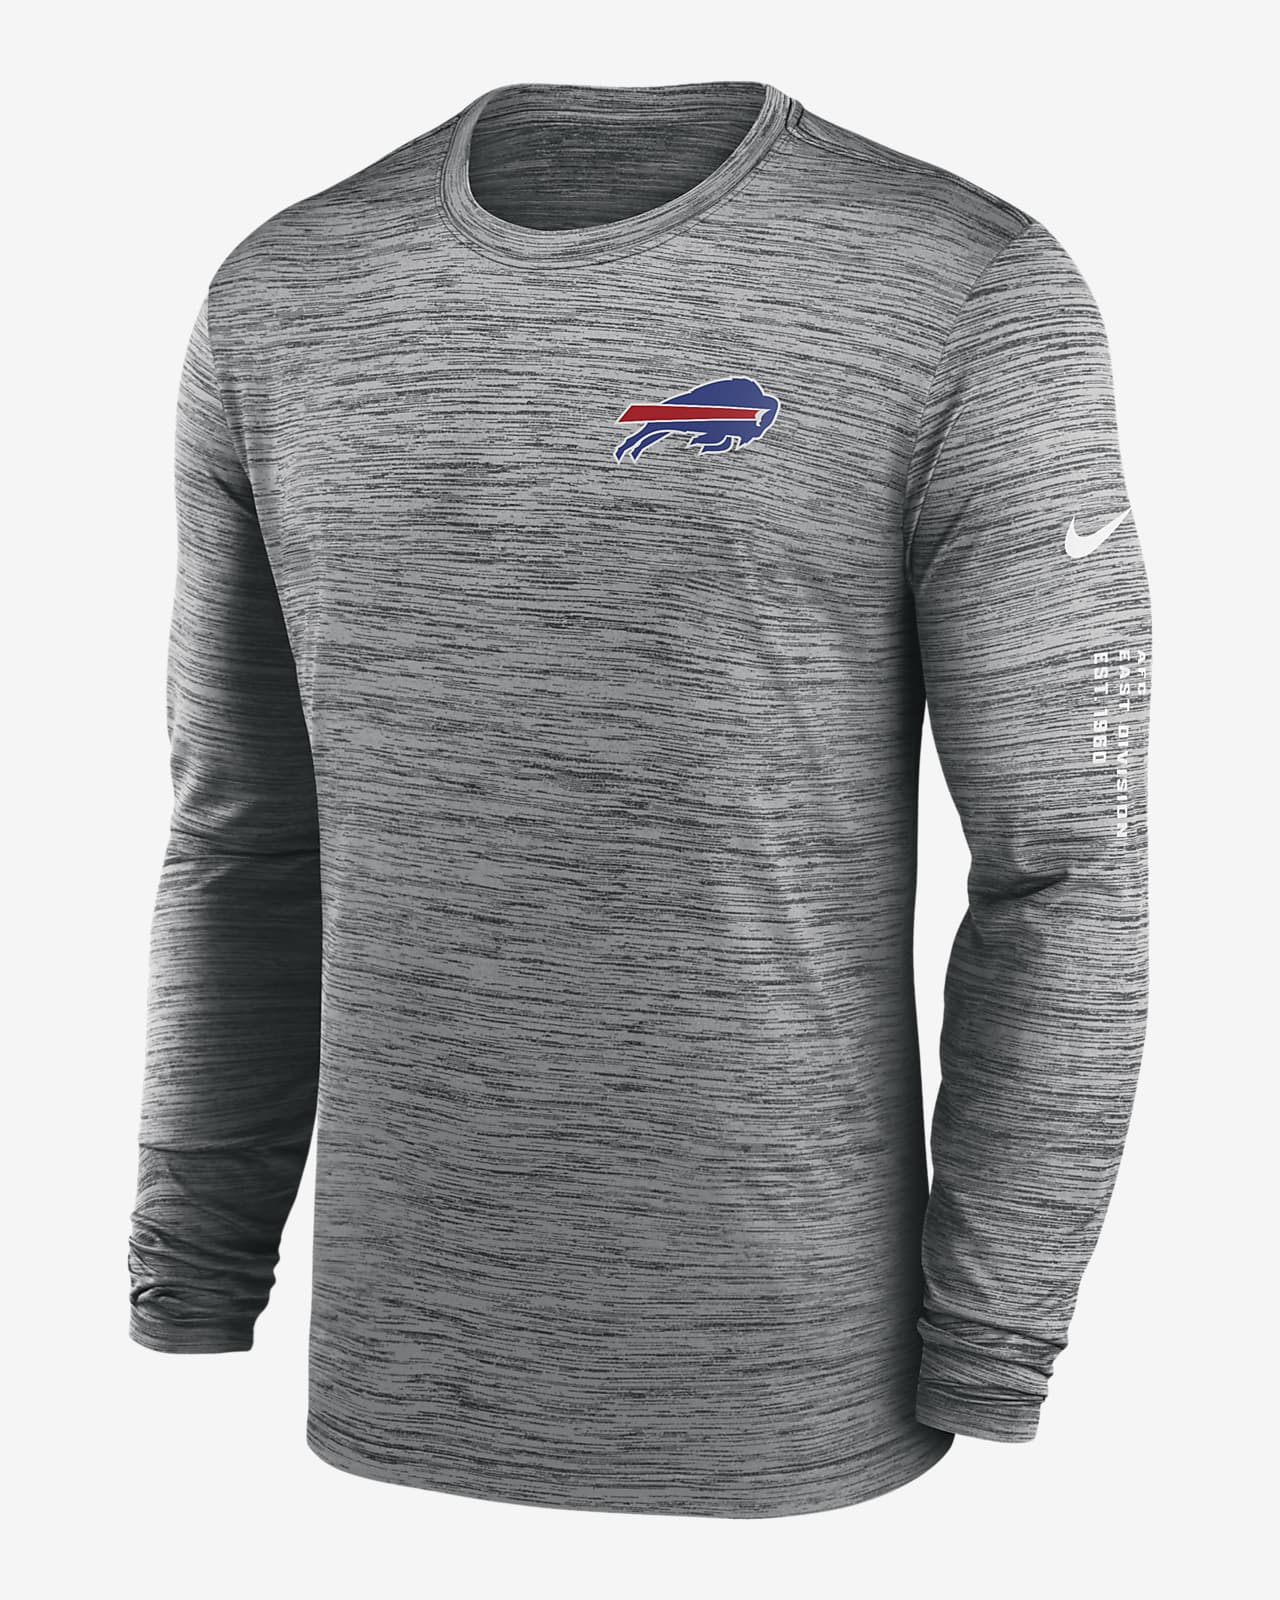 Buffalo Bills Long Sleeve Shirts